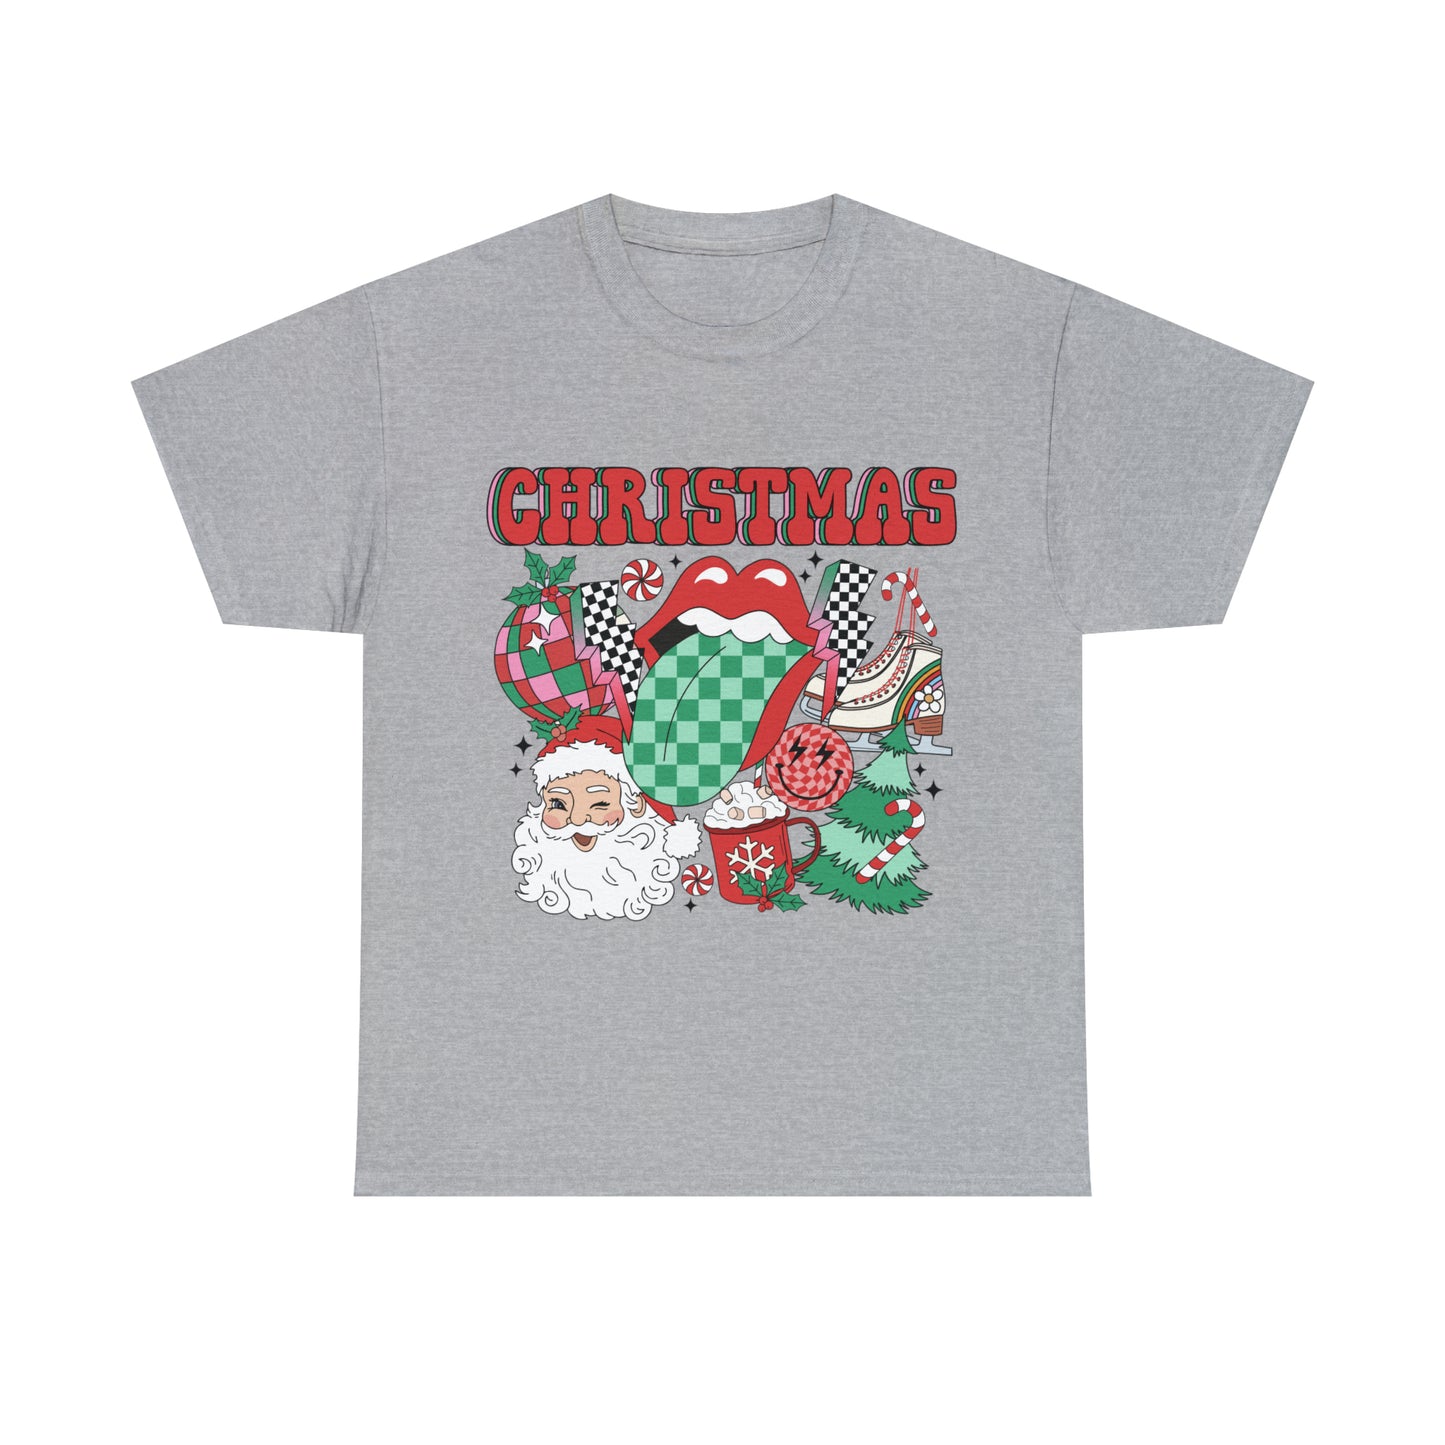 Retro Groovy Christmas (front) - Unisex T-shirt